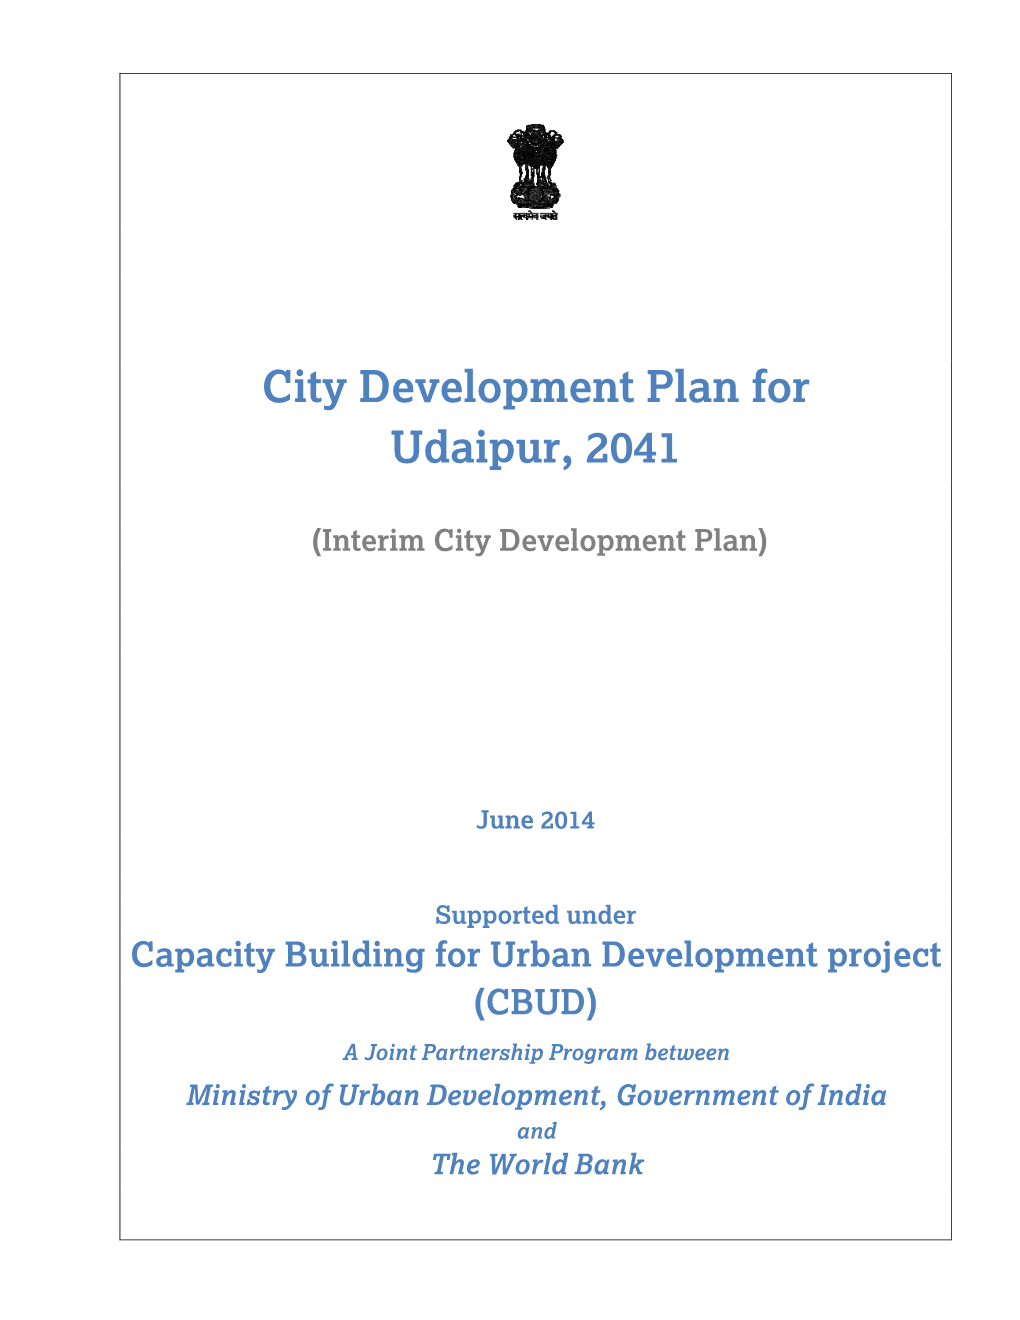 City Development Plan for Udaipur, 2041